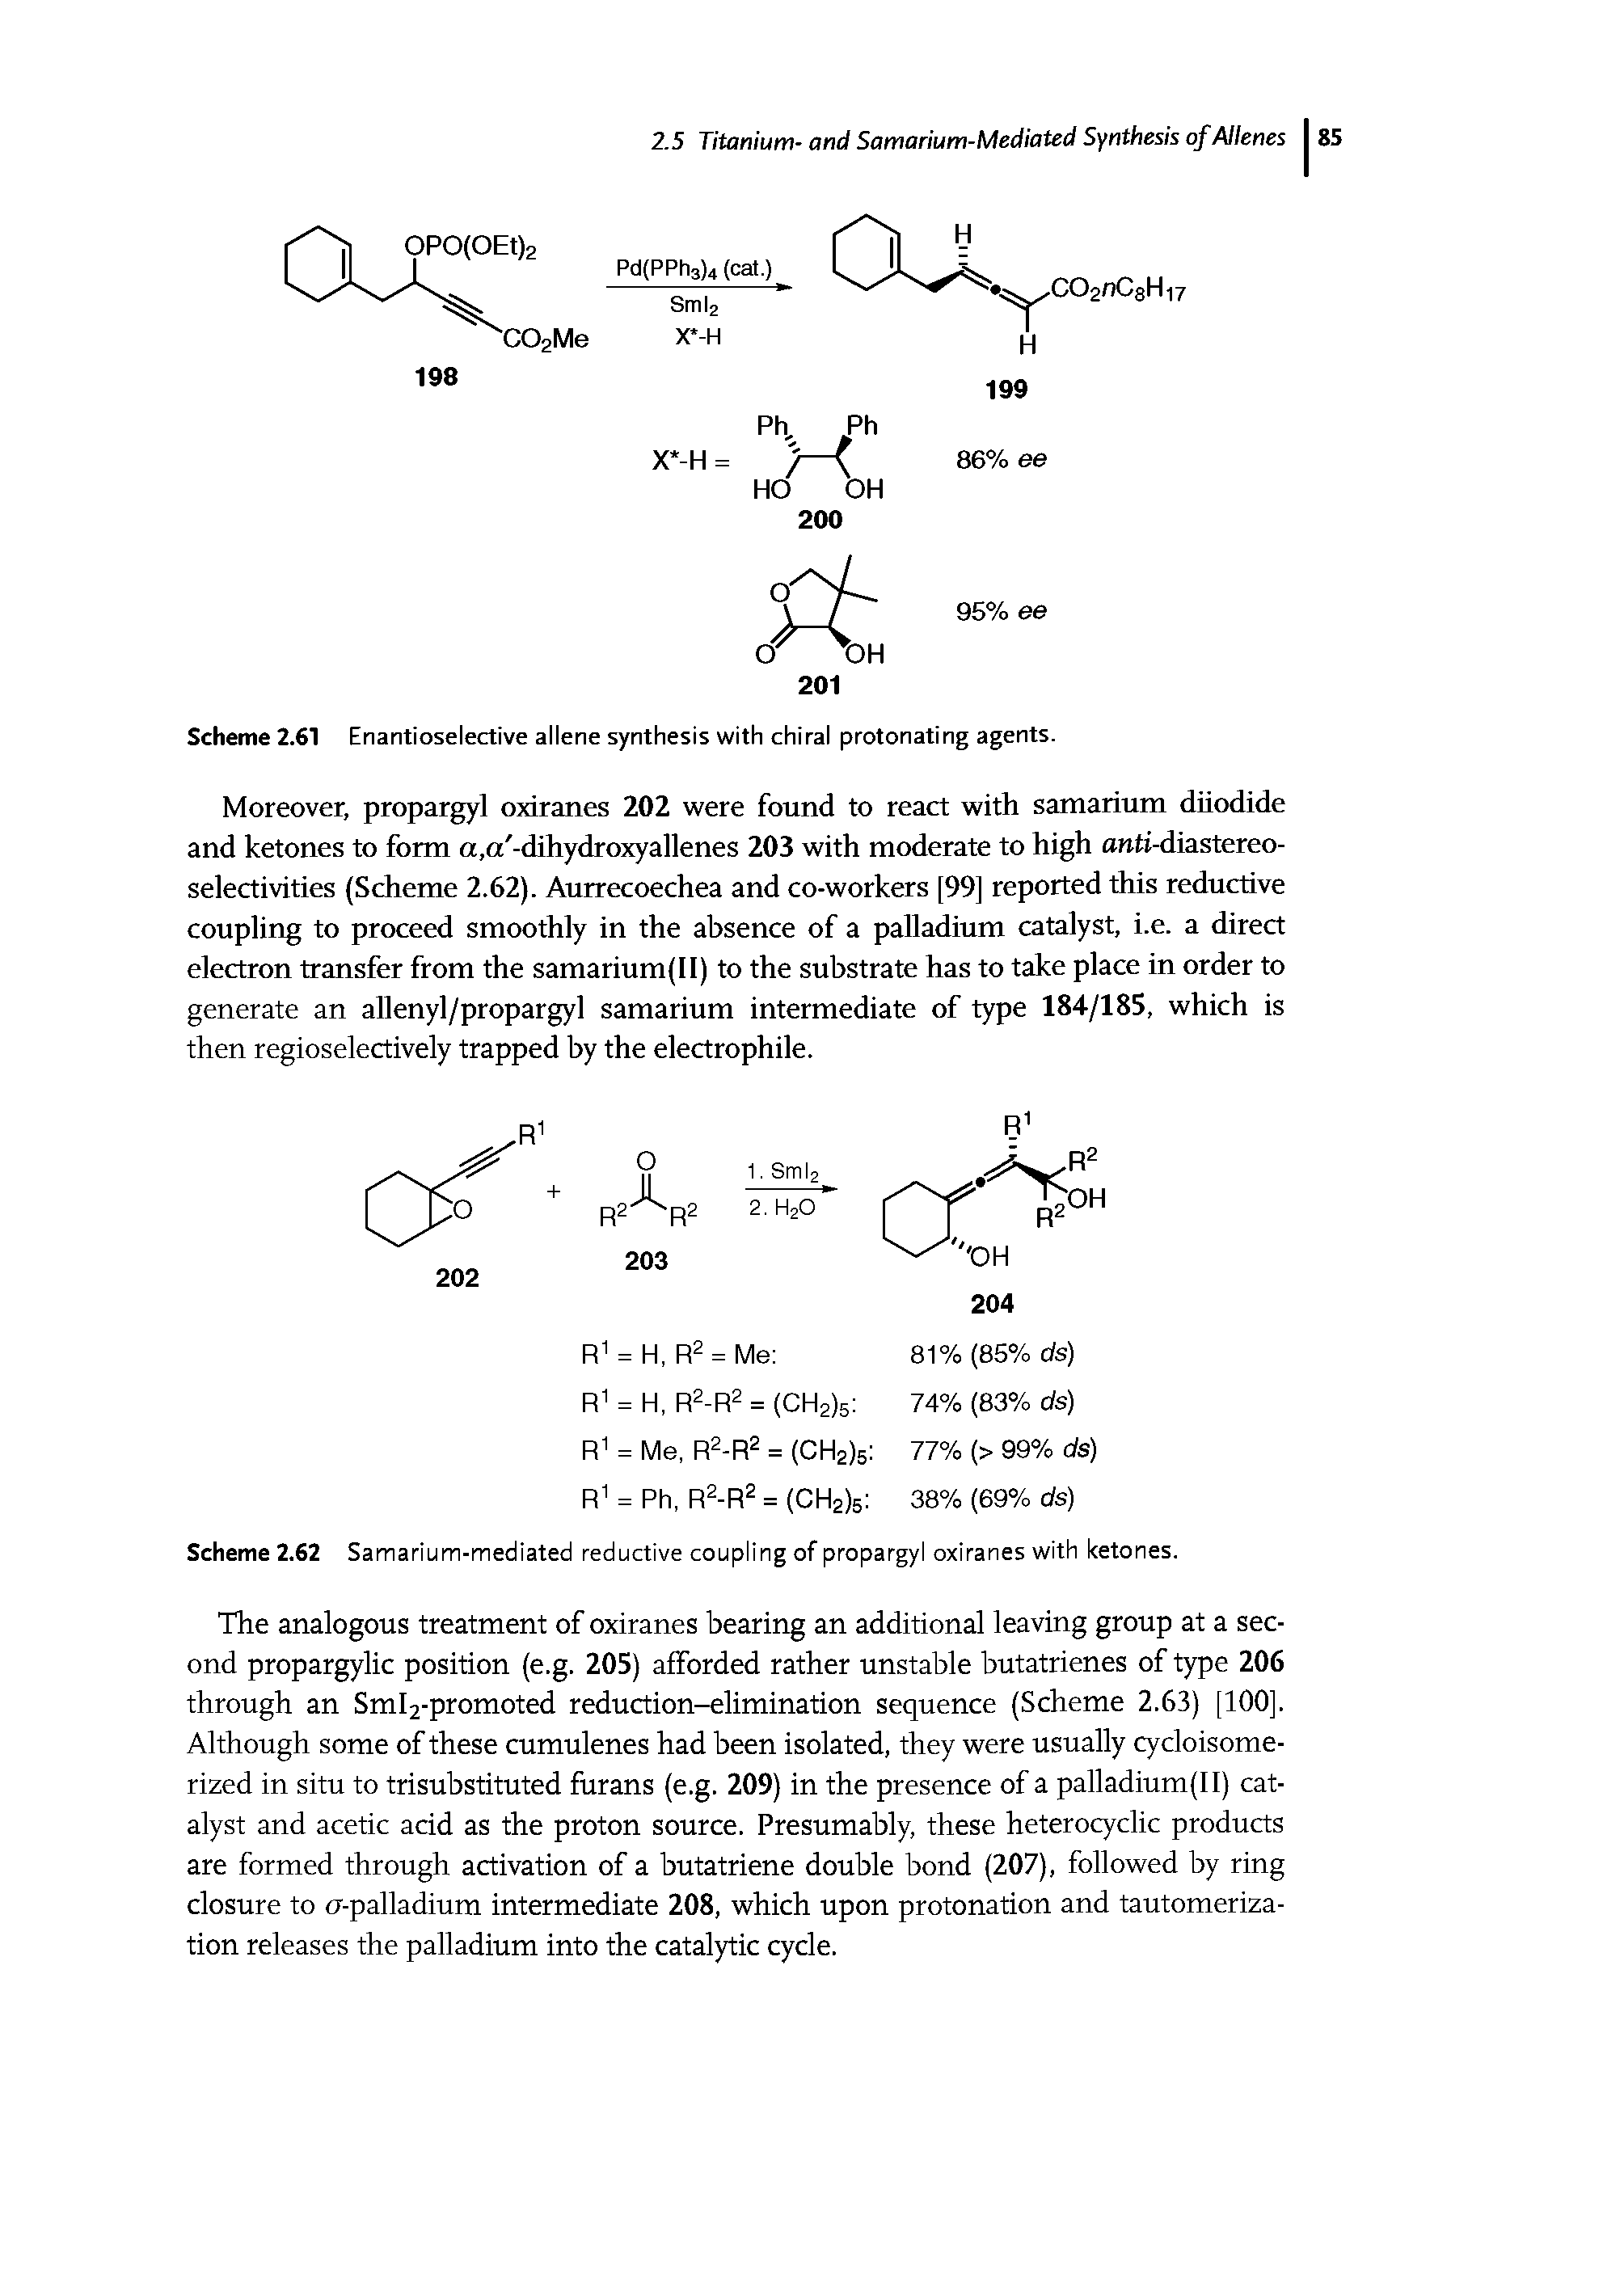 Scheme 2.62 Samarium-mediated reductive coupling of propargyl oxiranes with ketones.